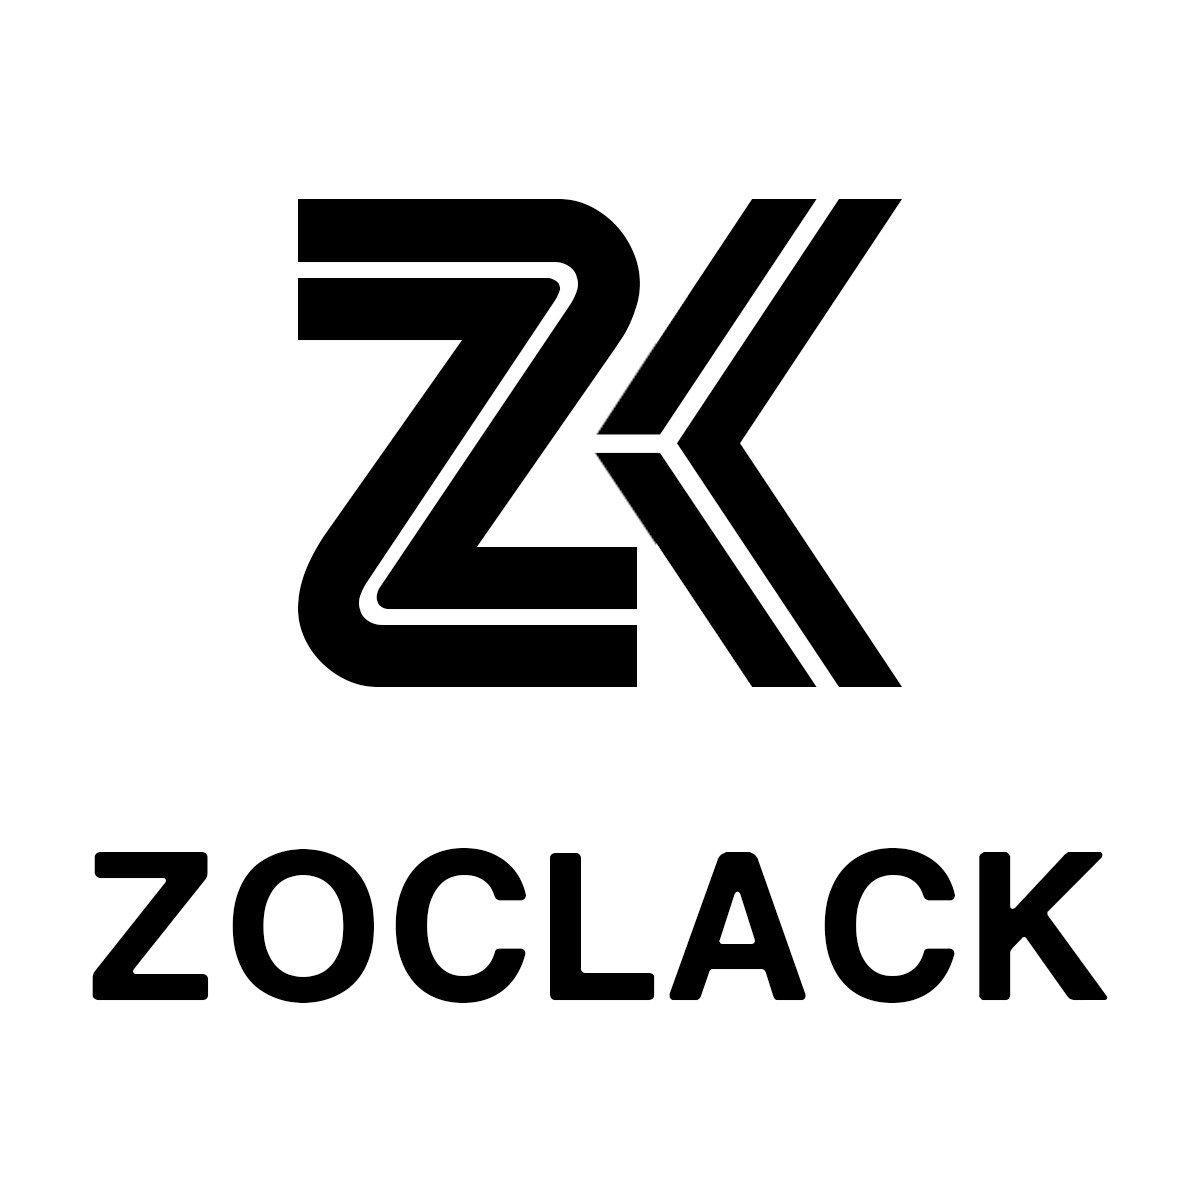 Zoclack